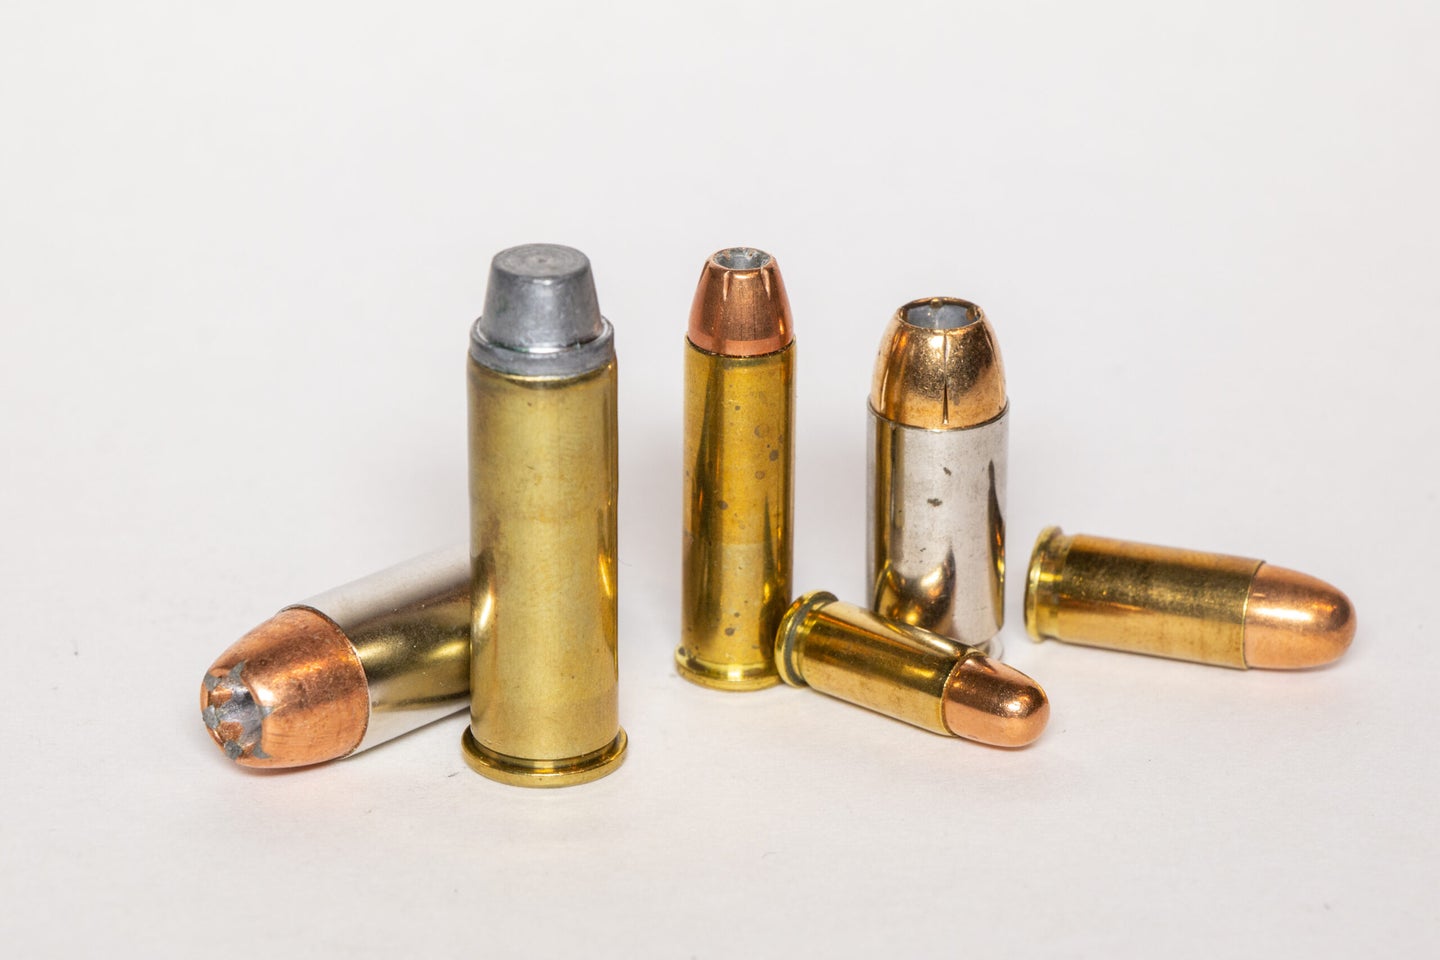 Six handgun cartridges on a white background.